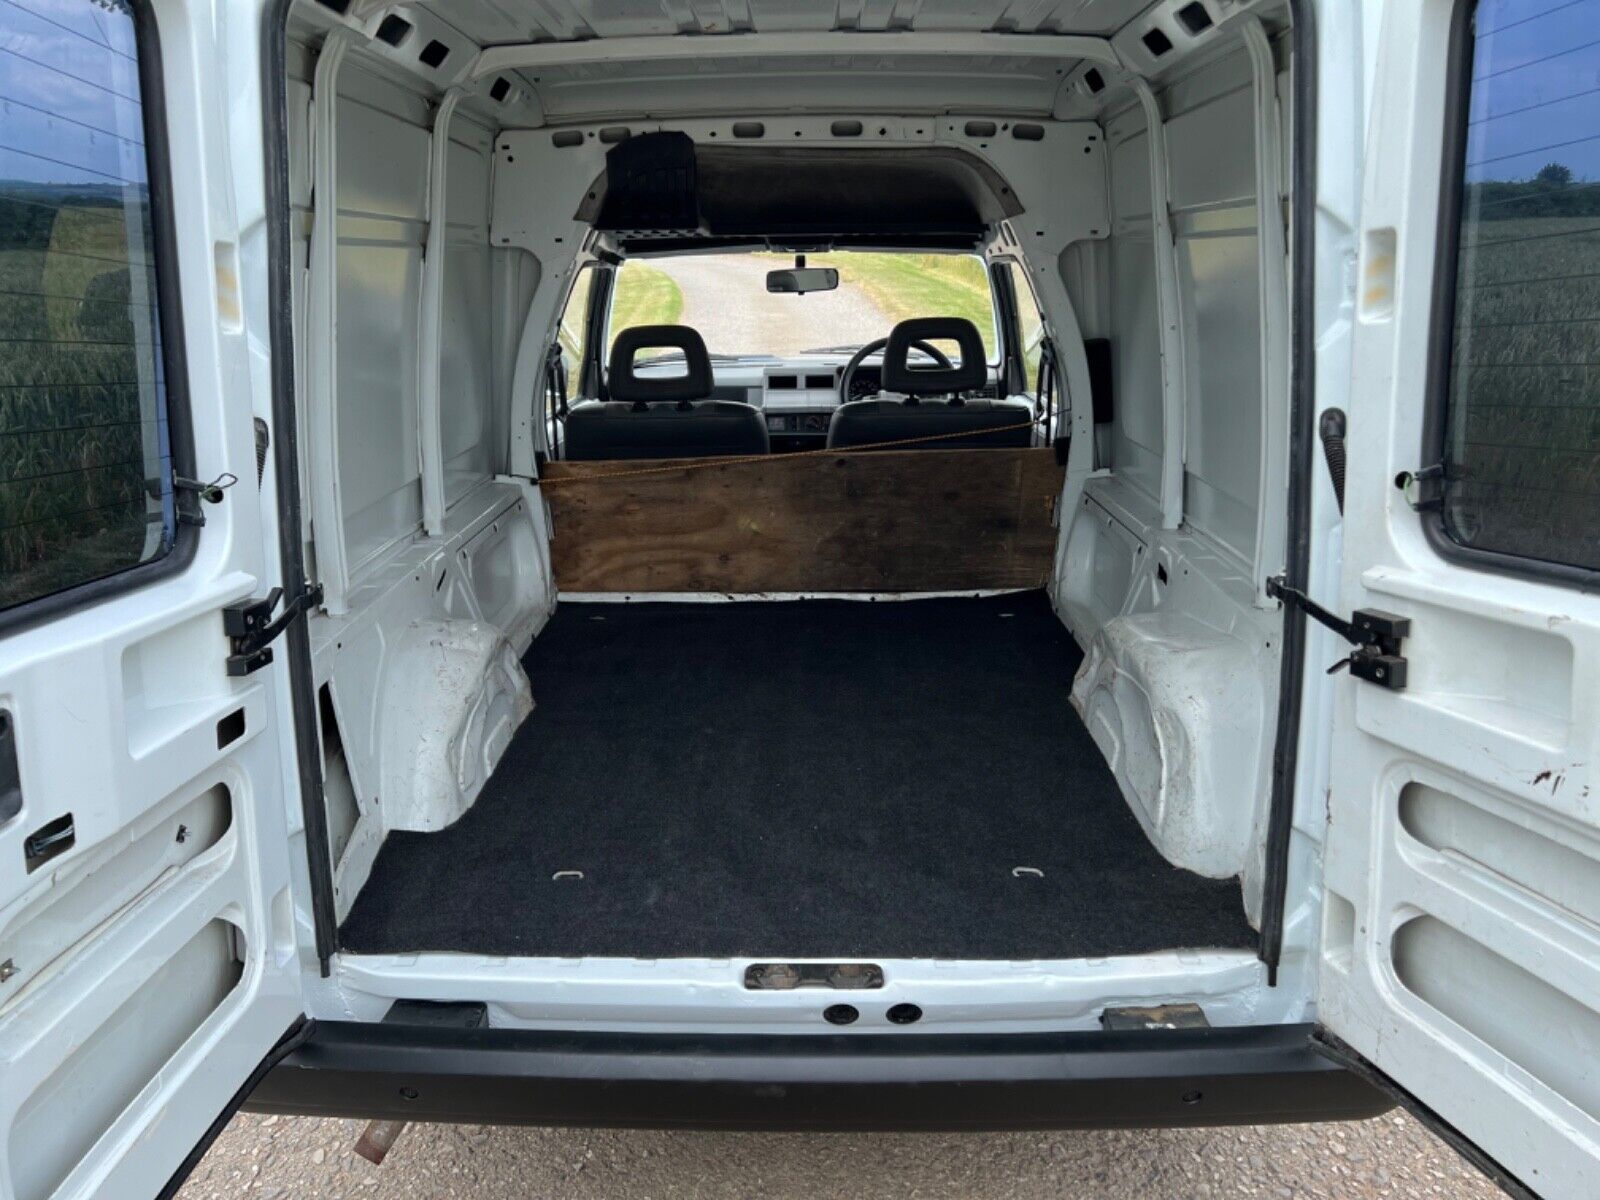 Renault Extra van load bay